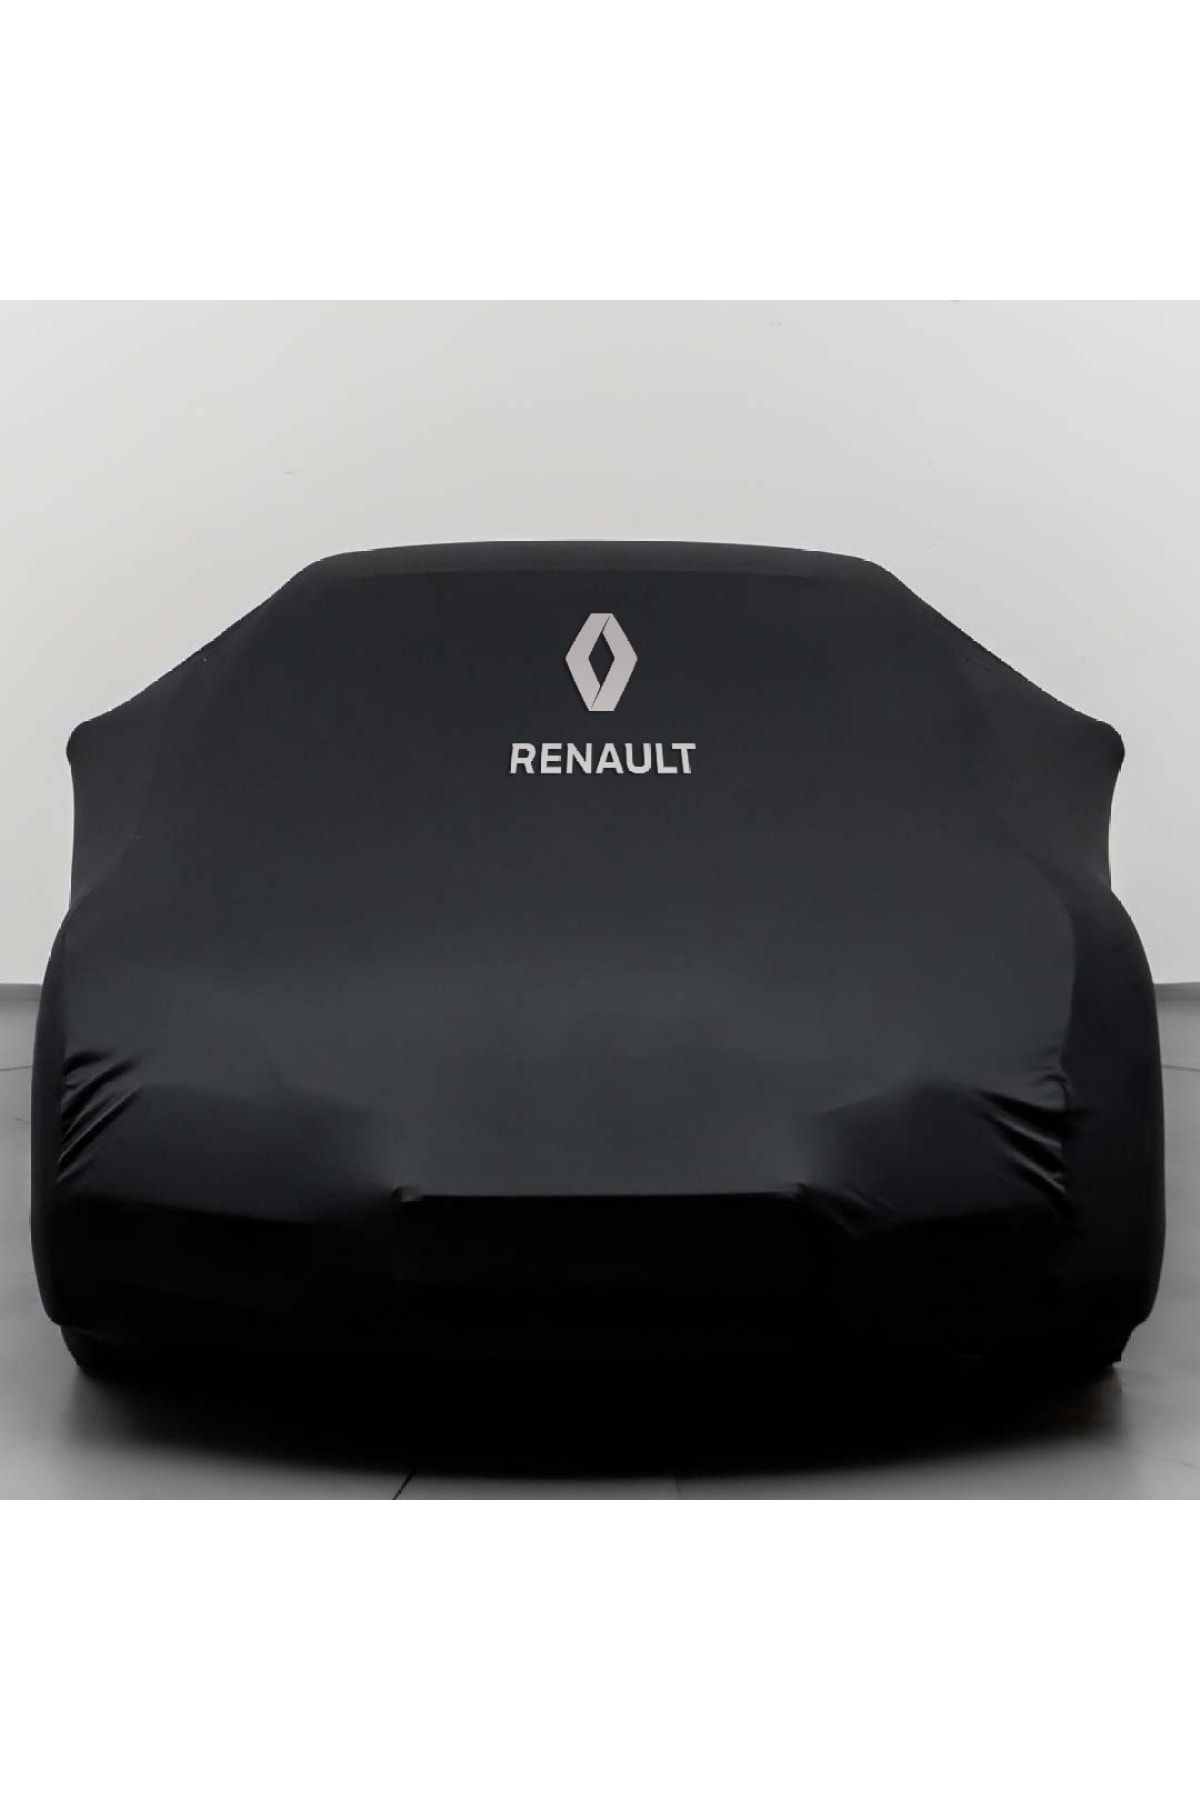 Teksin Renault Talisman Black Automobile Fabric Combed Cotton Car